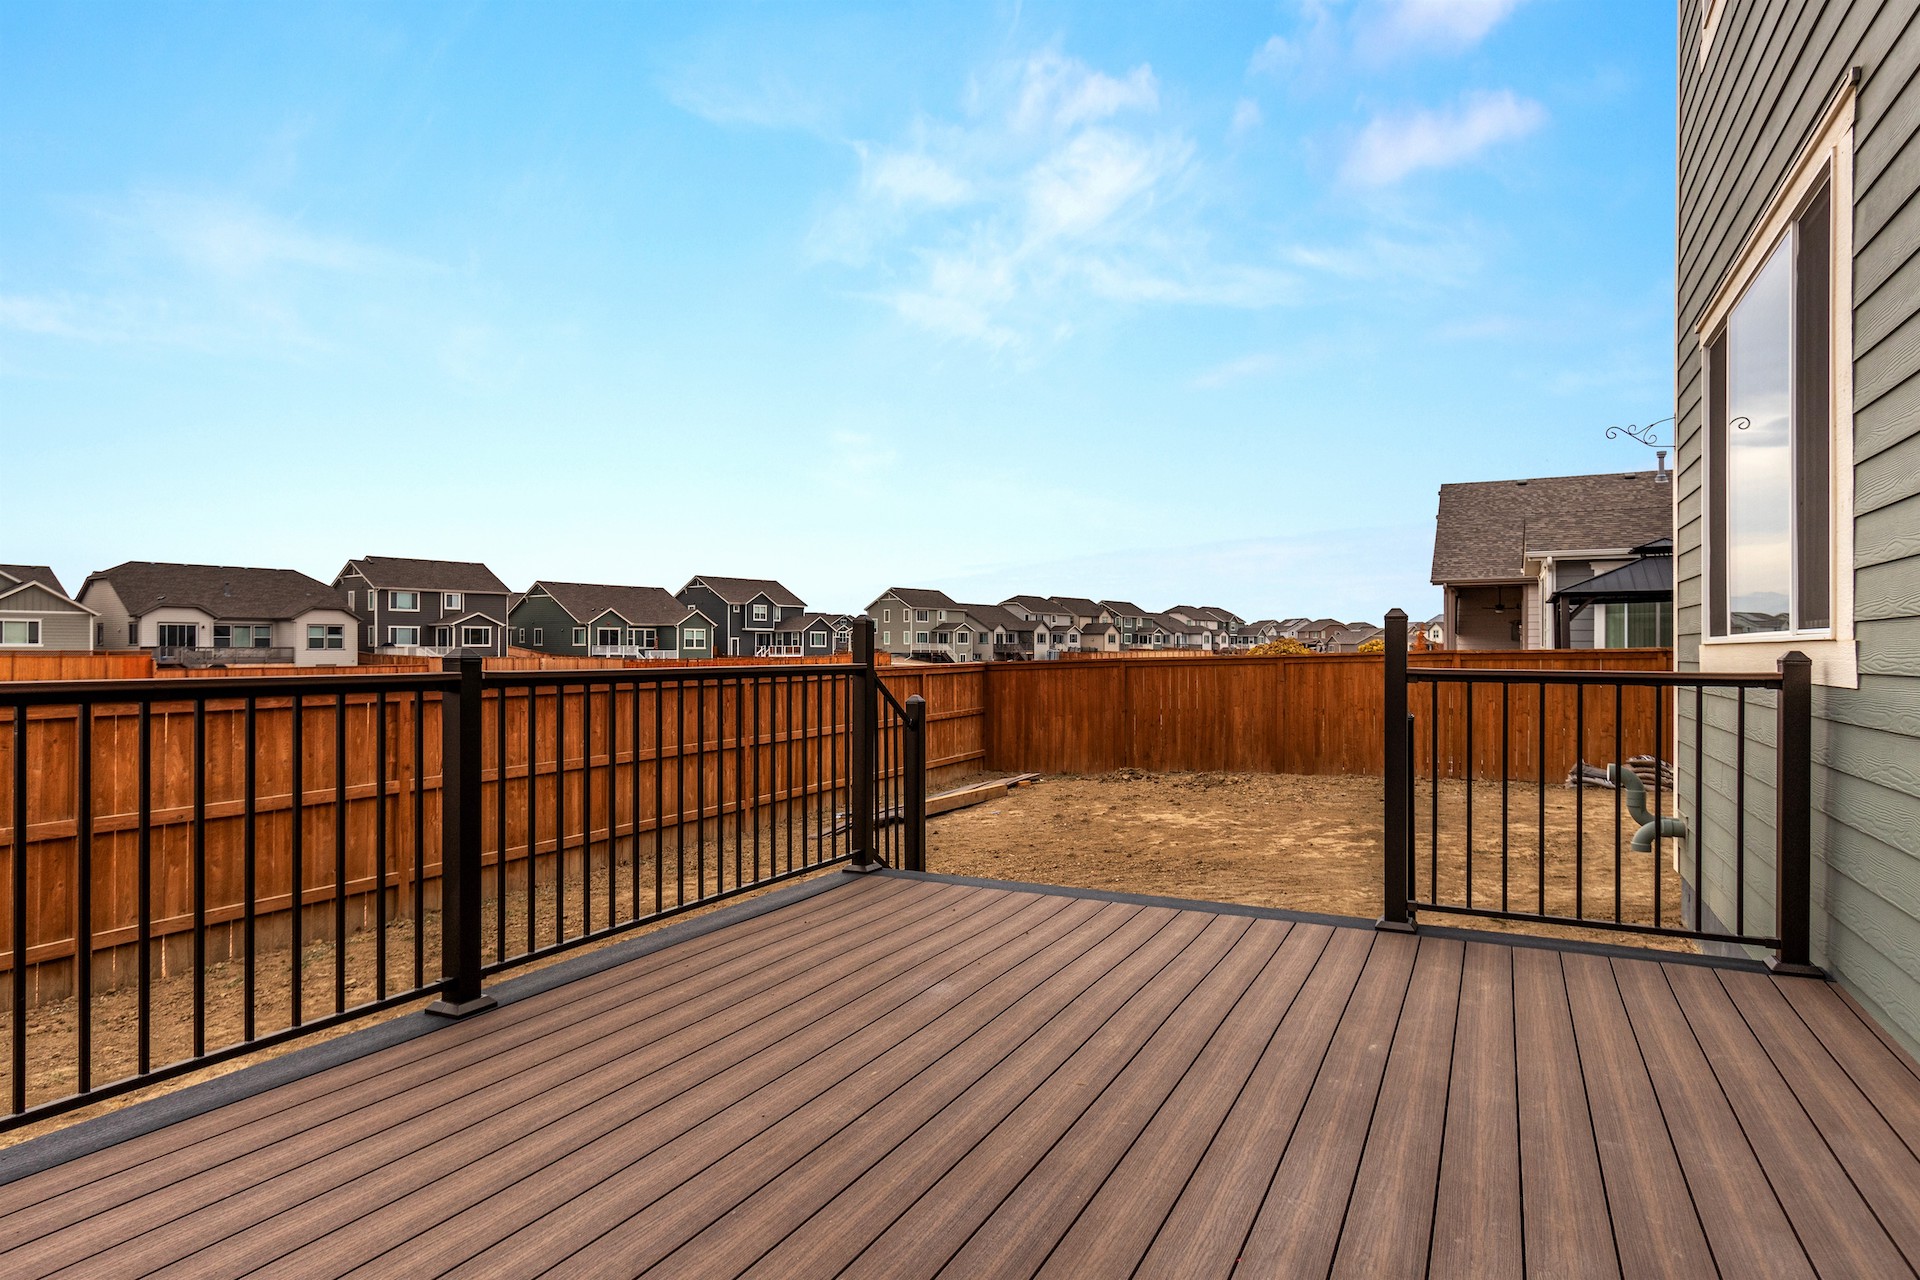 Large wooden deck with dark brown railing